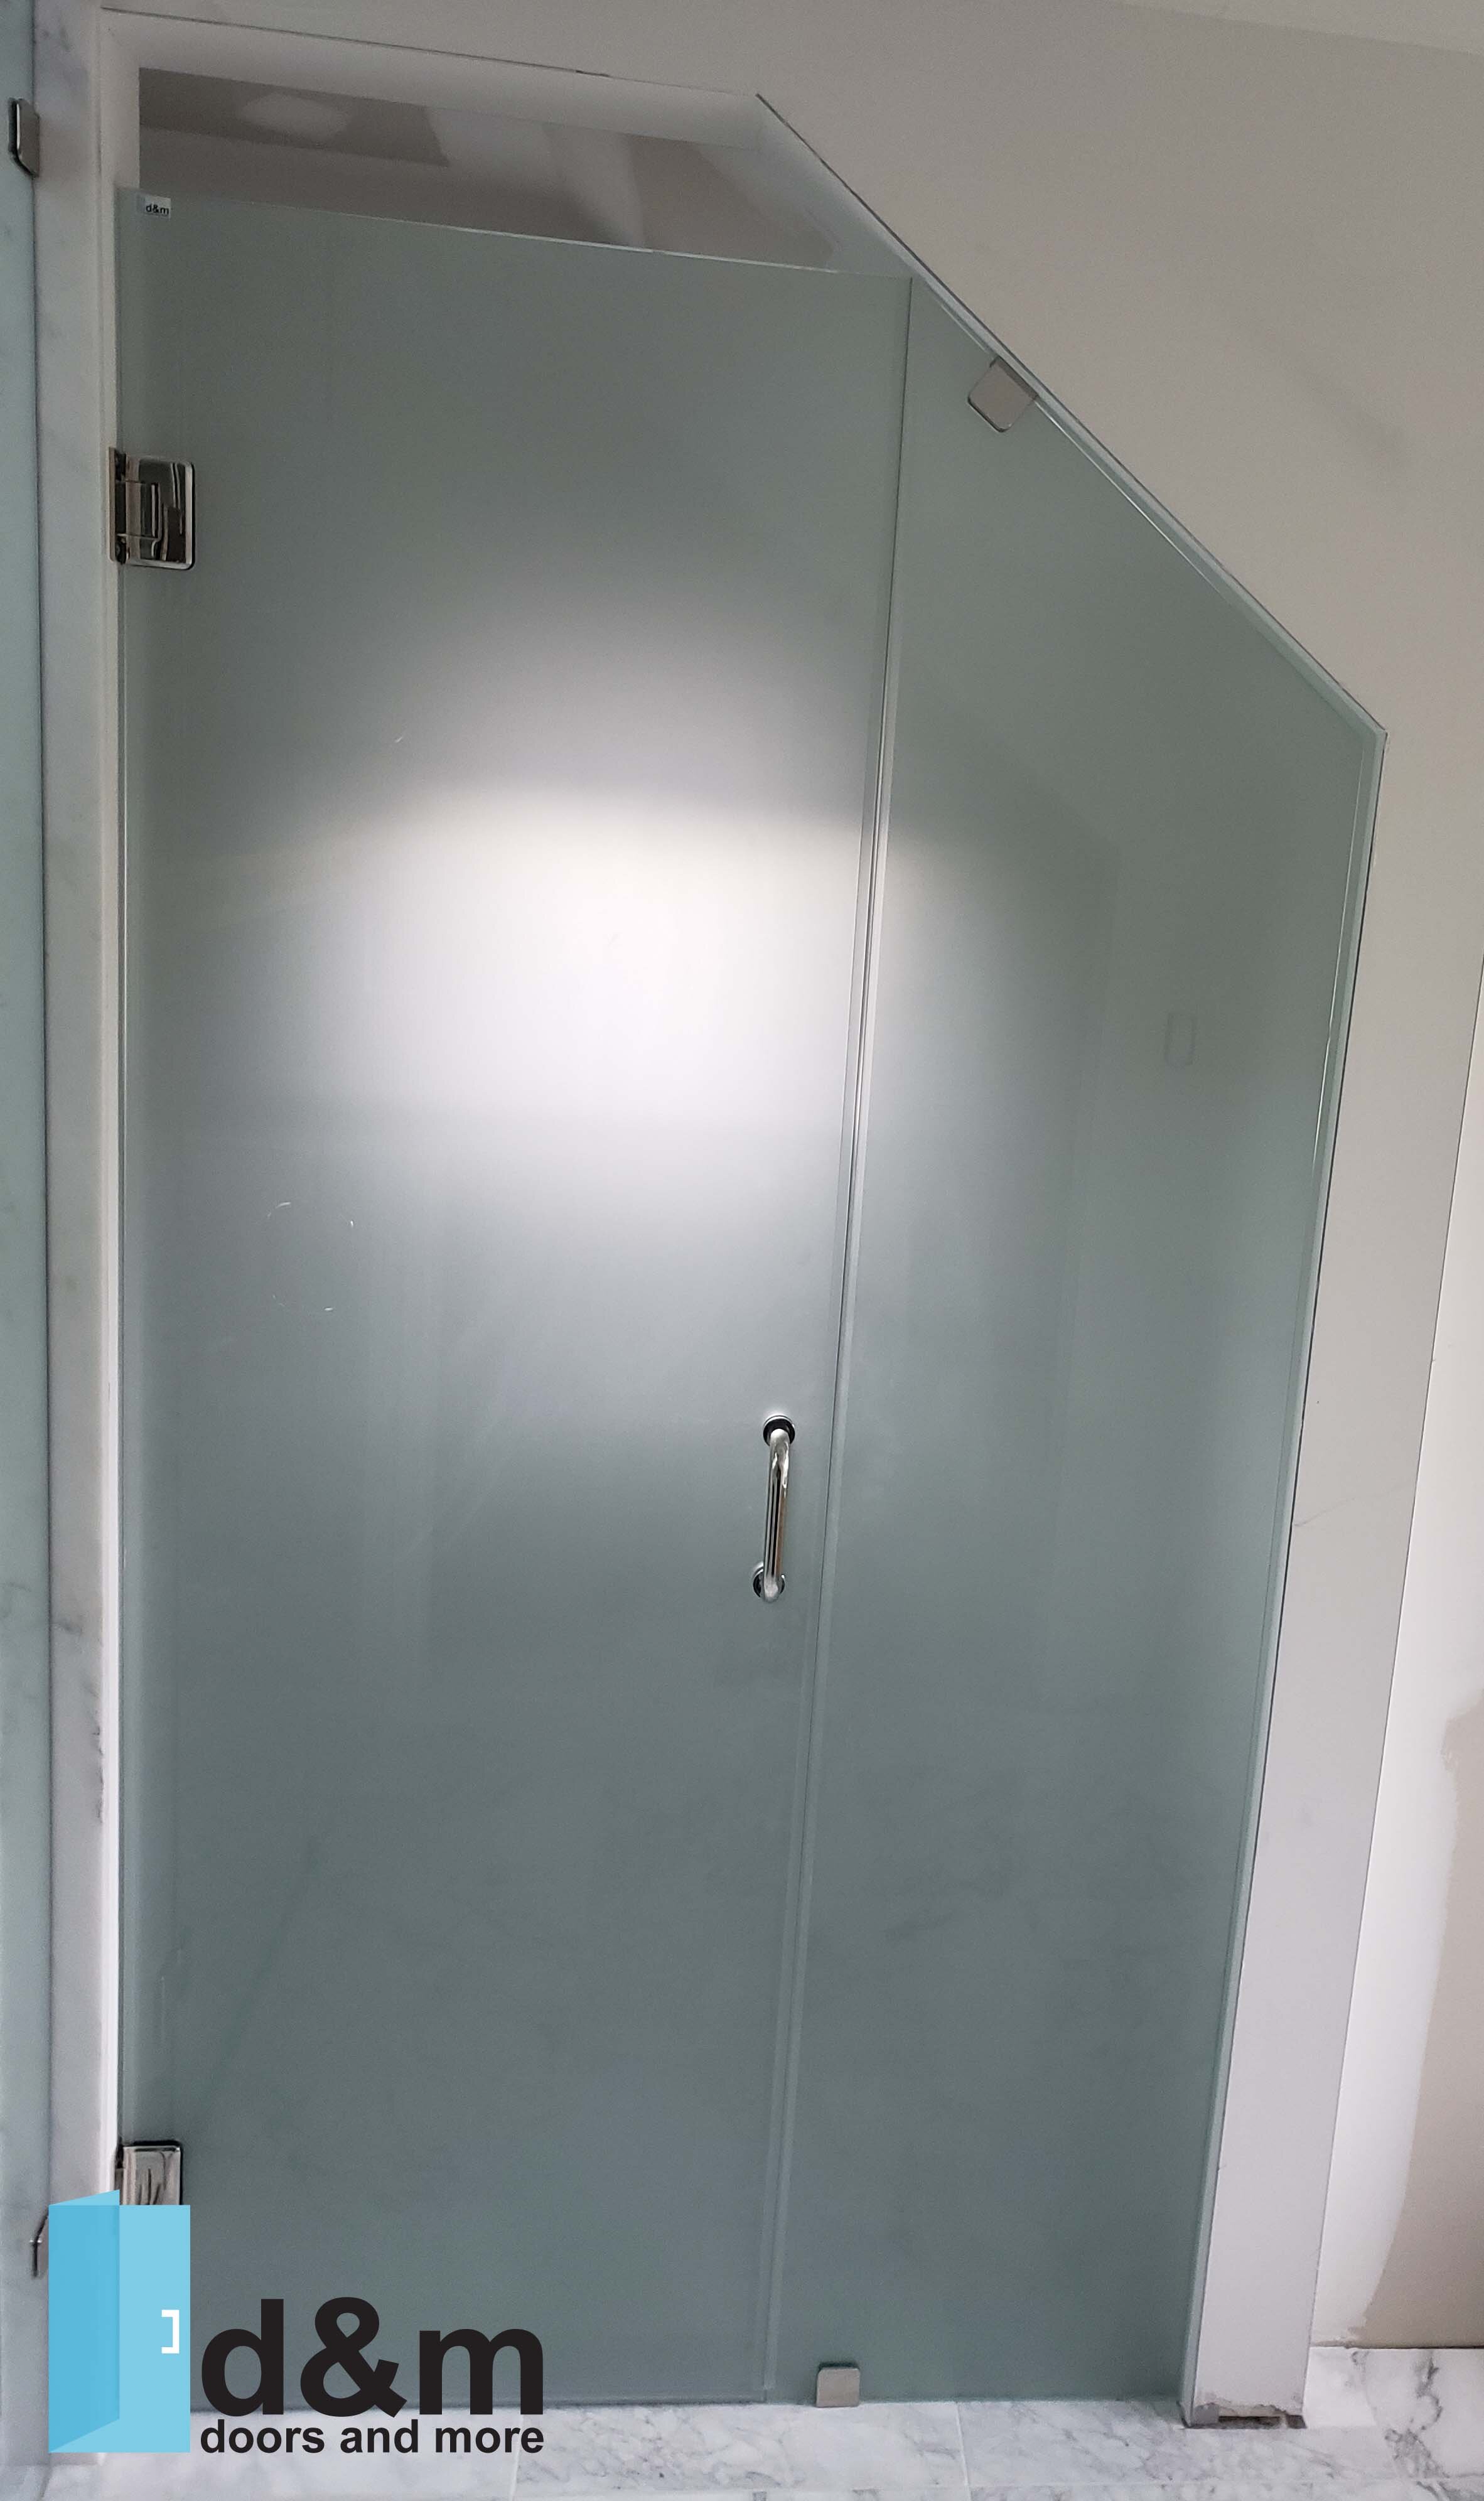 Photos — Doors and More Frameless Shower Application